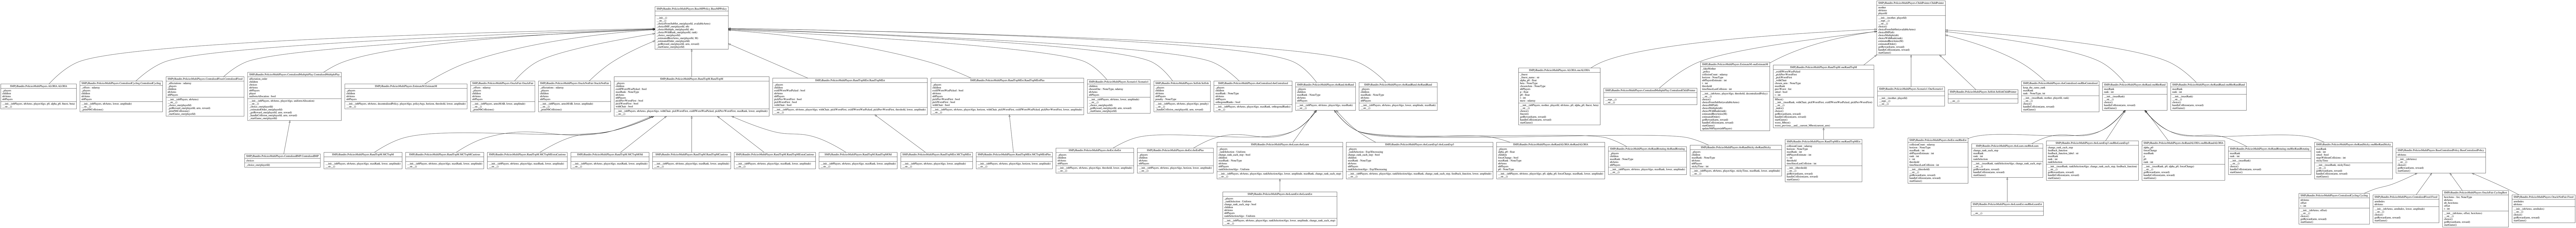 UML Diagram - classe SMPyBandits.PoliciesMultiPlayers.png